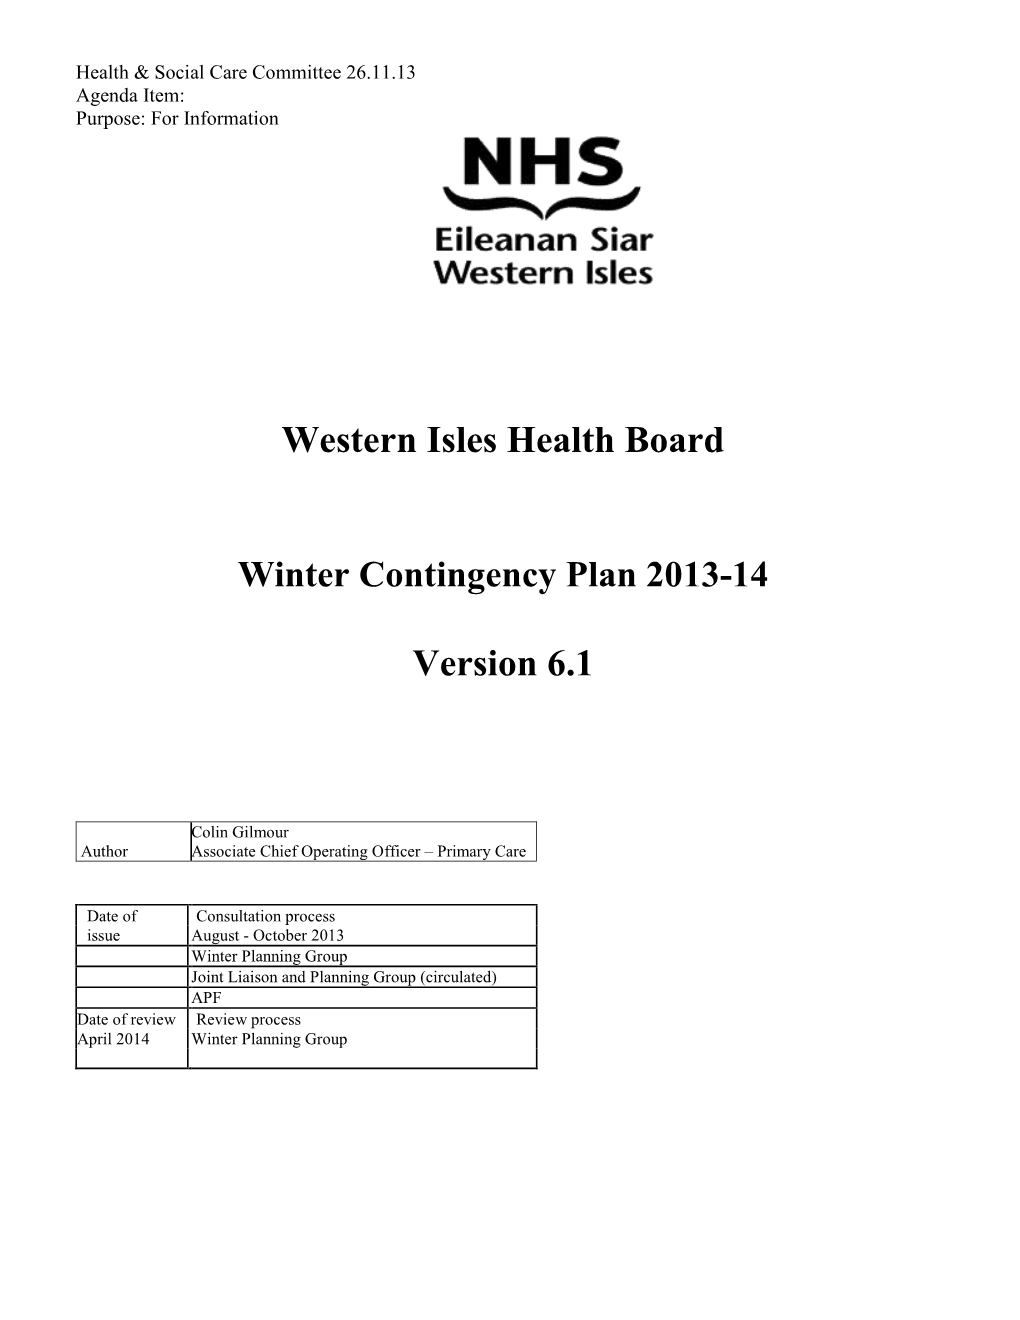 Western Isles Health Board Version